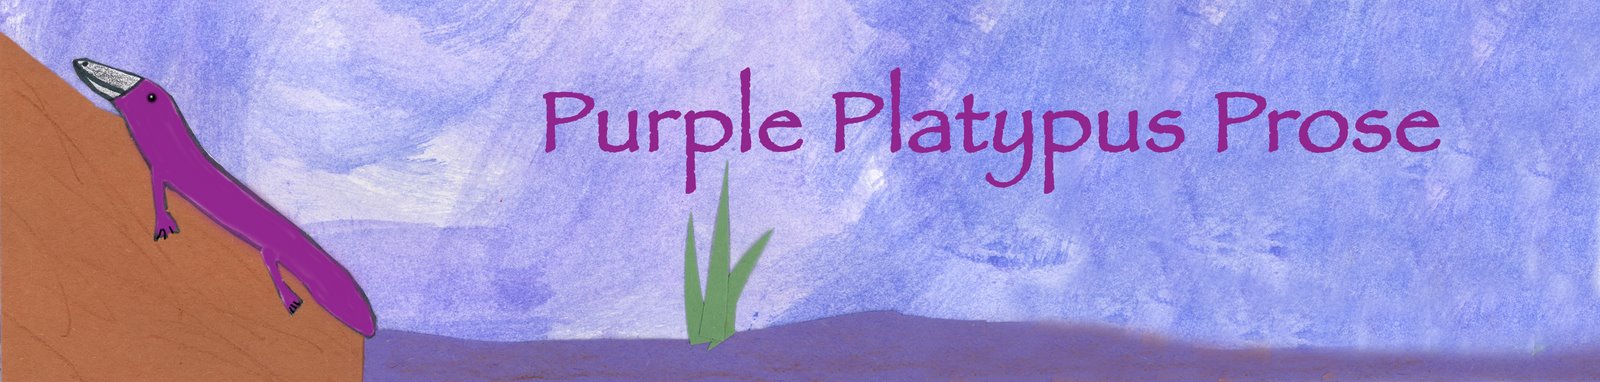 Purple Platypus Prose